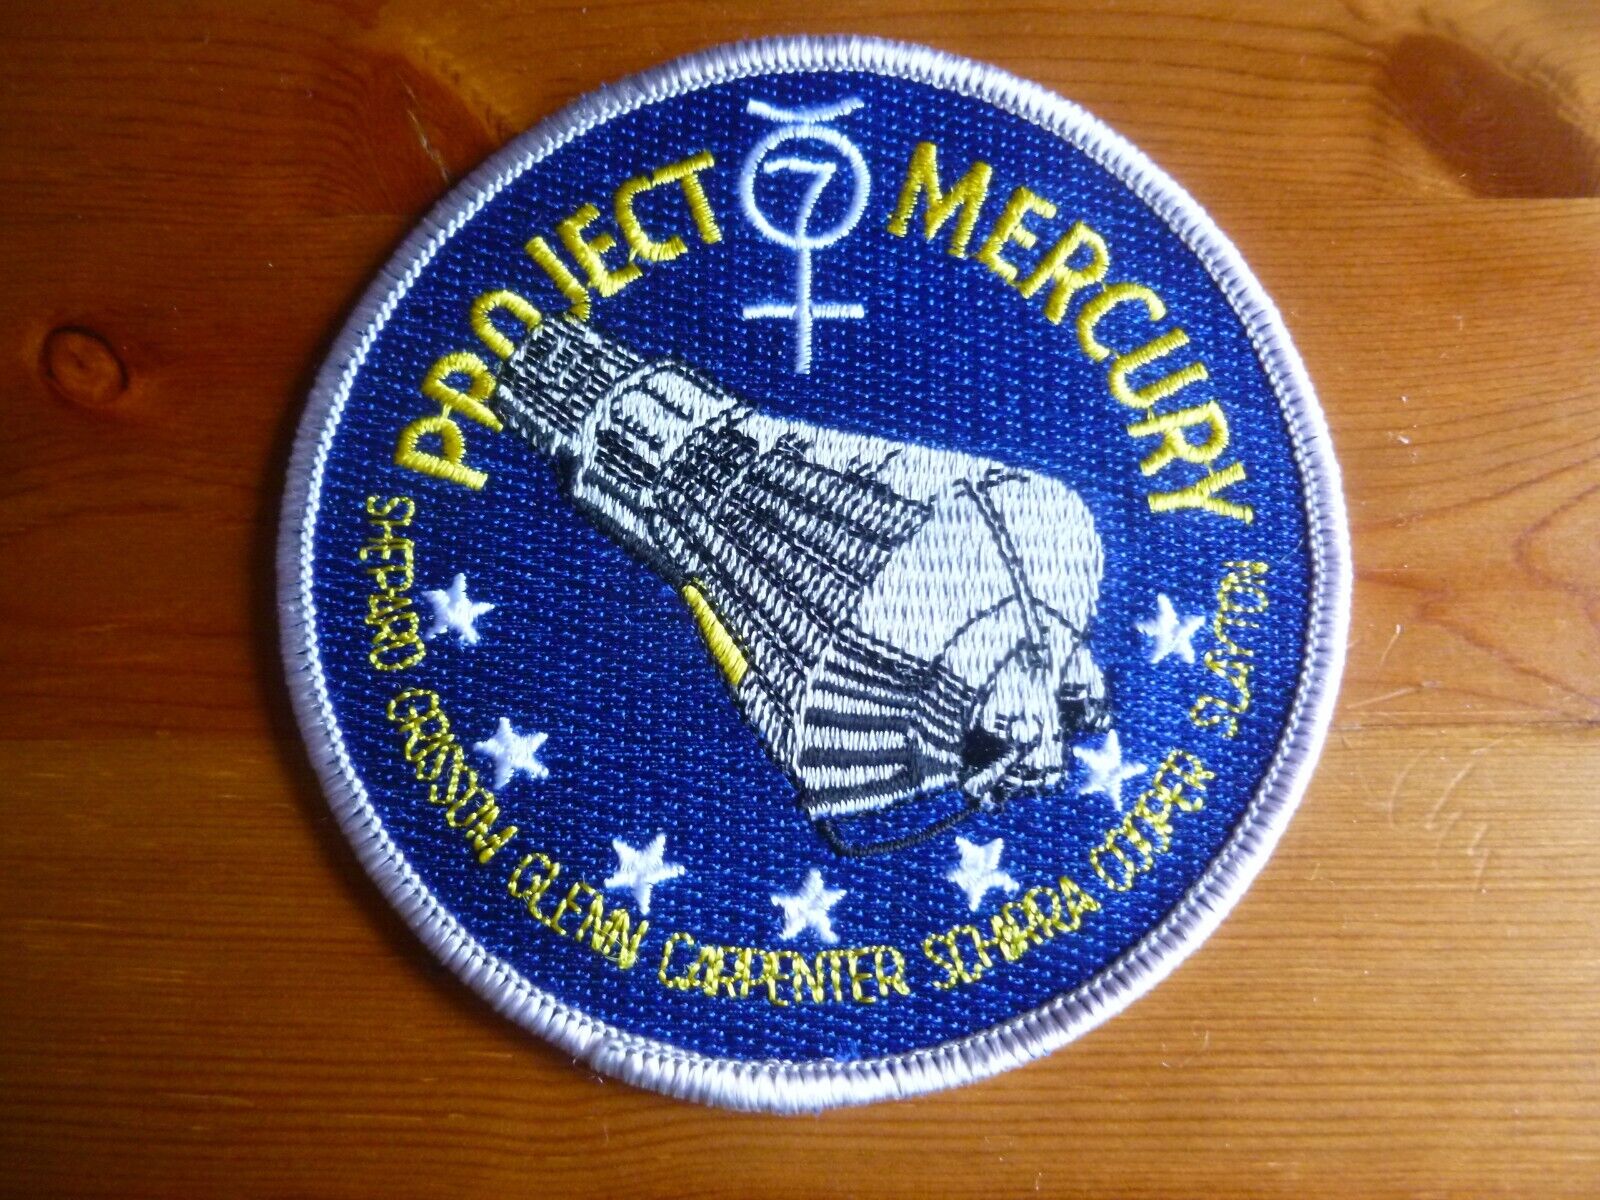 NASA SPACE MERCURY 7 PROJECT Patch USA Sheppard Grissom Glenn 1960 Cooper